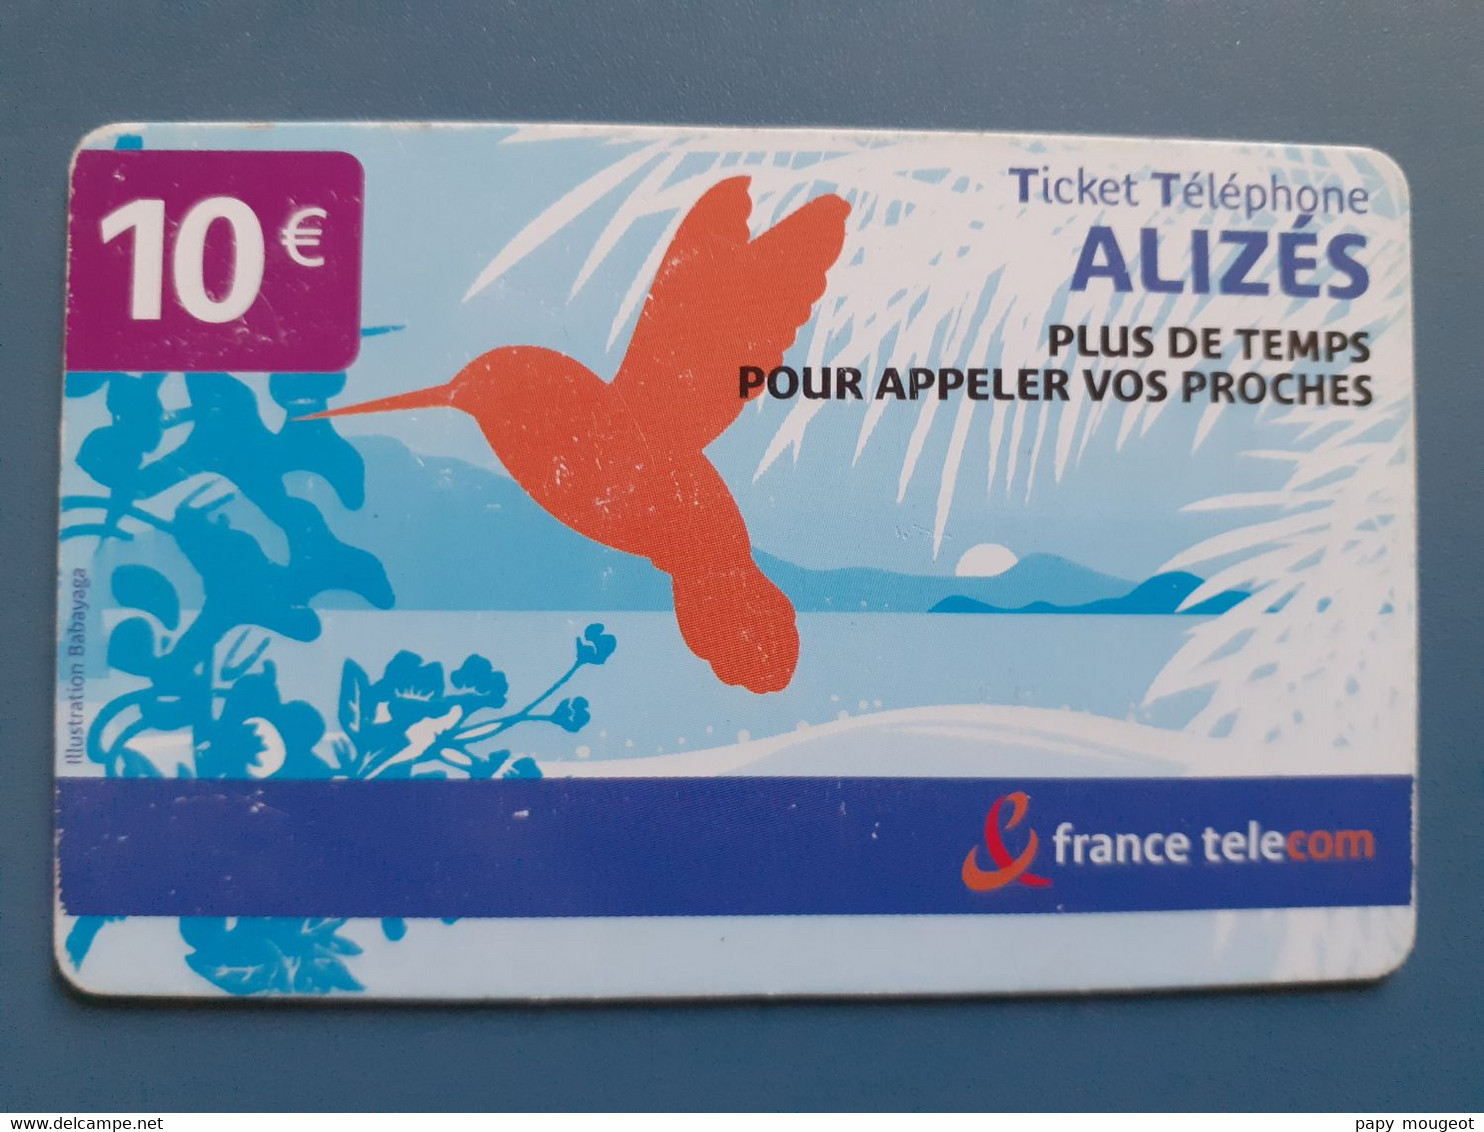 Ticket Téléphone Alizés France Télécom 10€ Validité 31/01/2008 - Série W 58350026346 - Biglietti FT